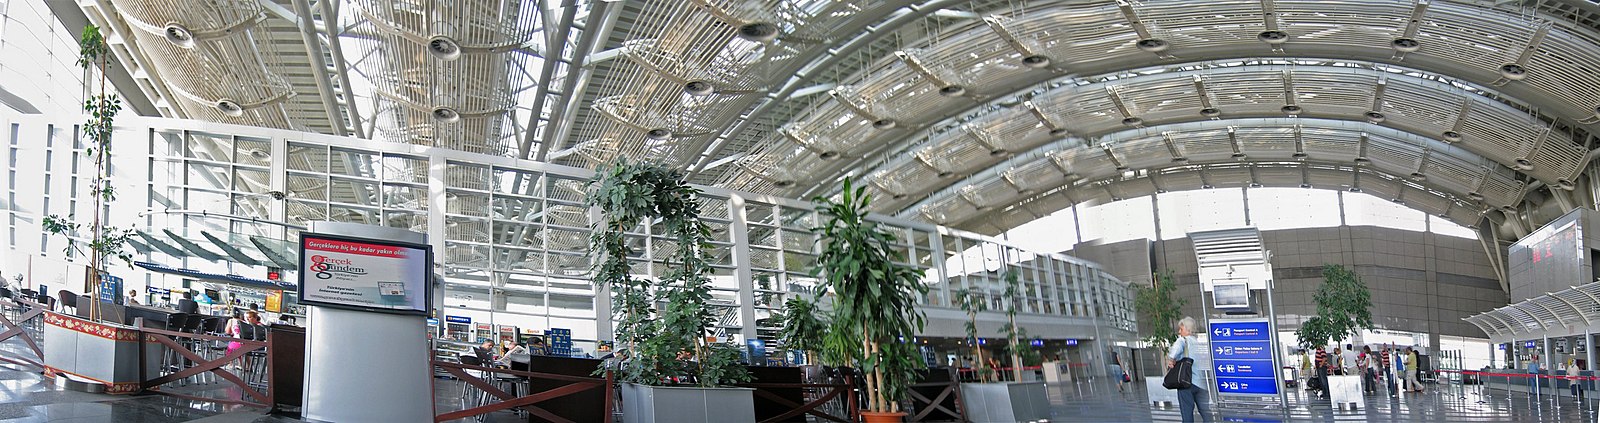 Аэропорт сабиха гекчен вылет. Сабиха Гекчен аэропорт Plaza Premium Lounge. Терминал Сабиха гегсен. Kozen p12 терминал.